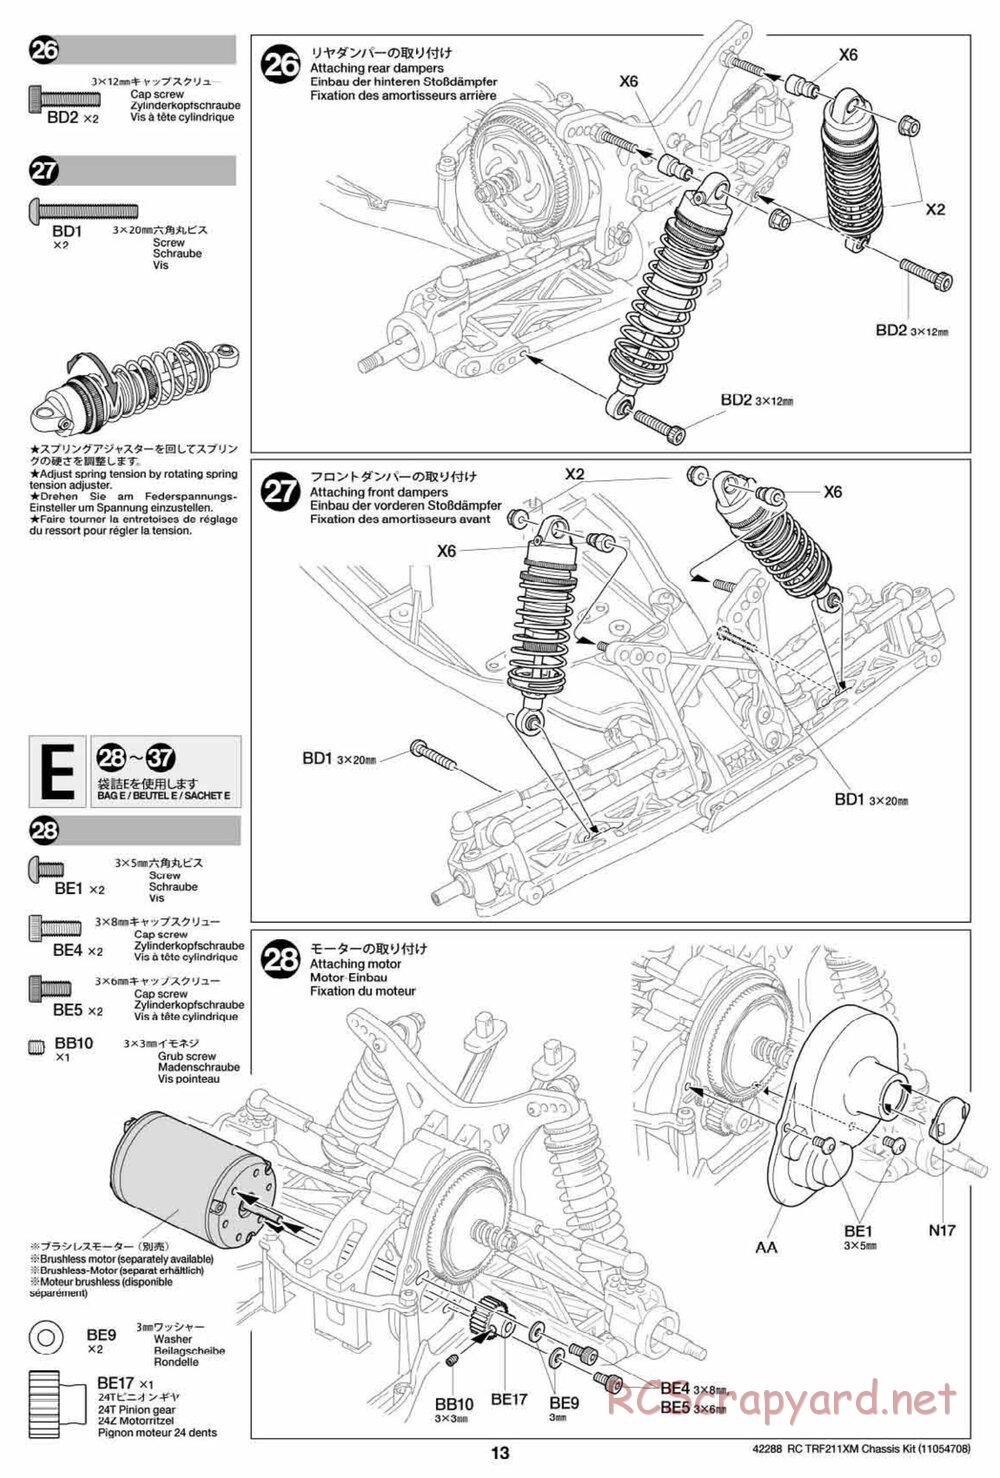 Tamiya - TRF211XM Chassis - Manual - Page 13